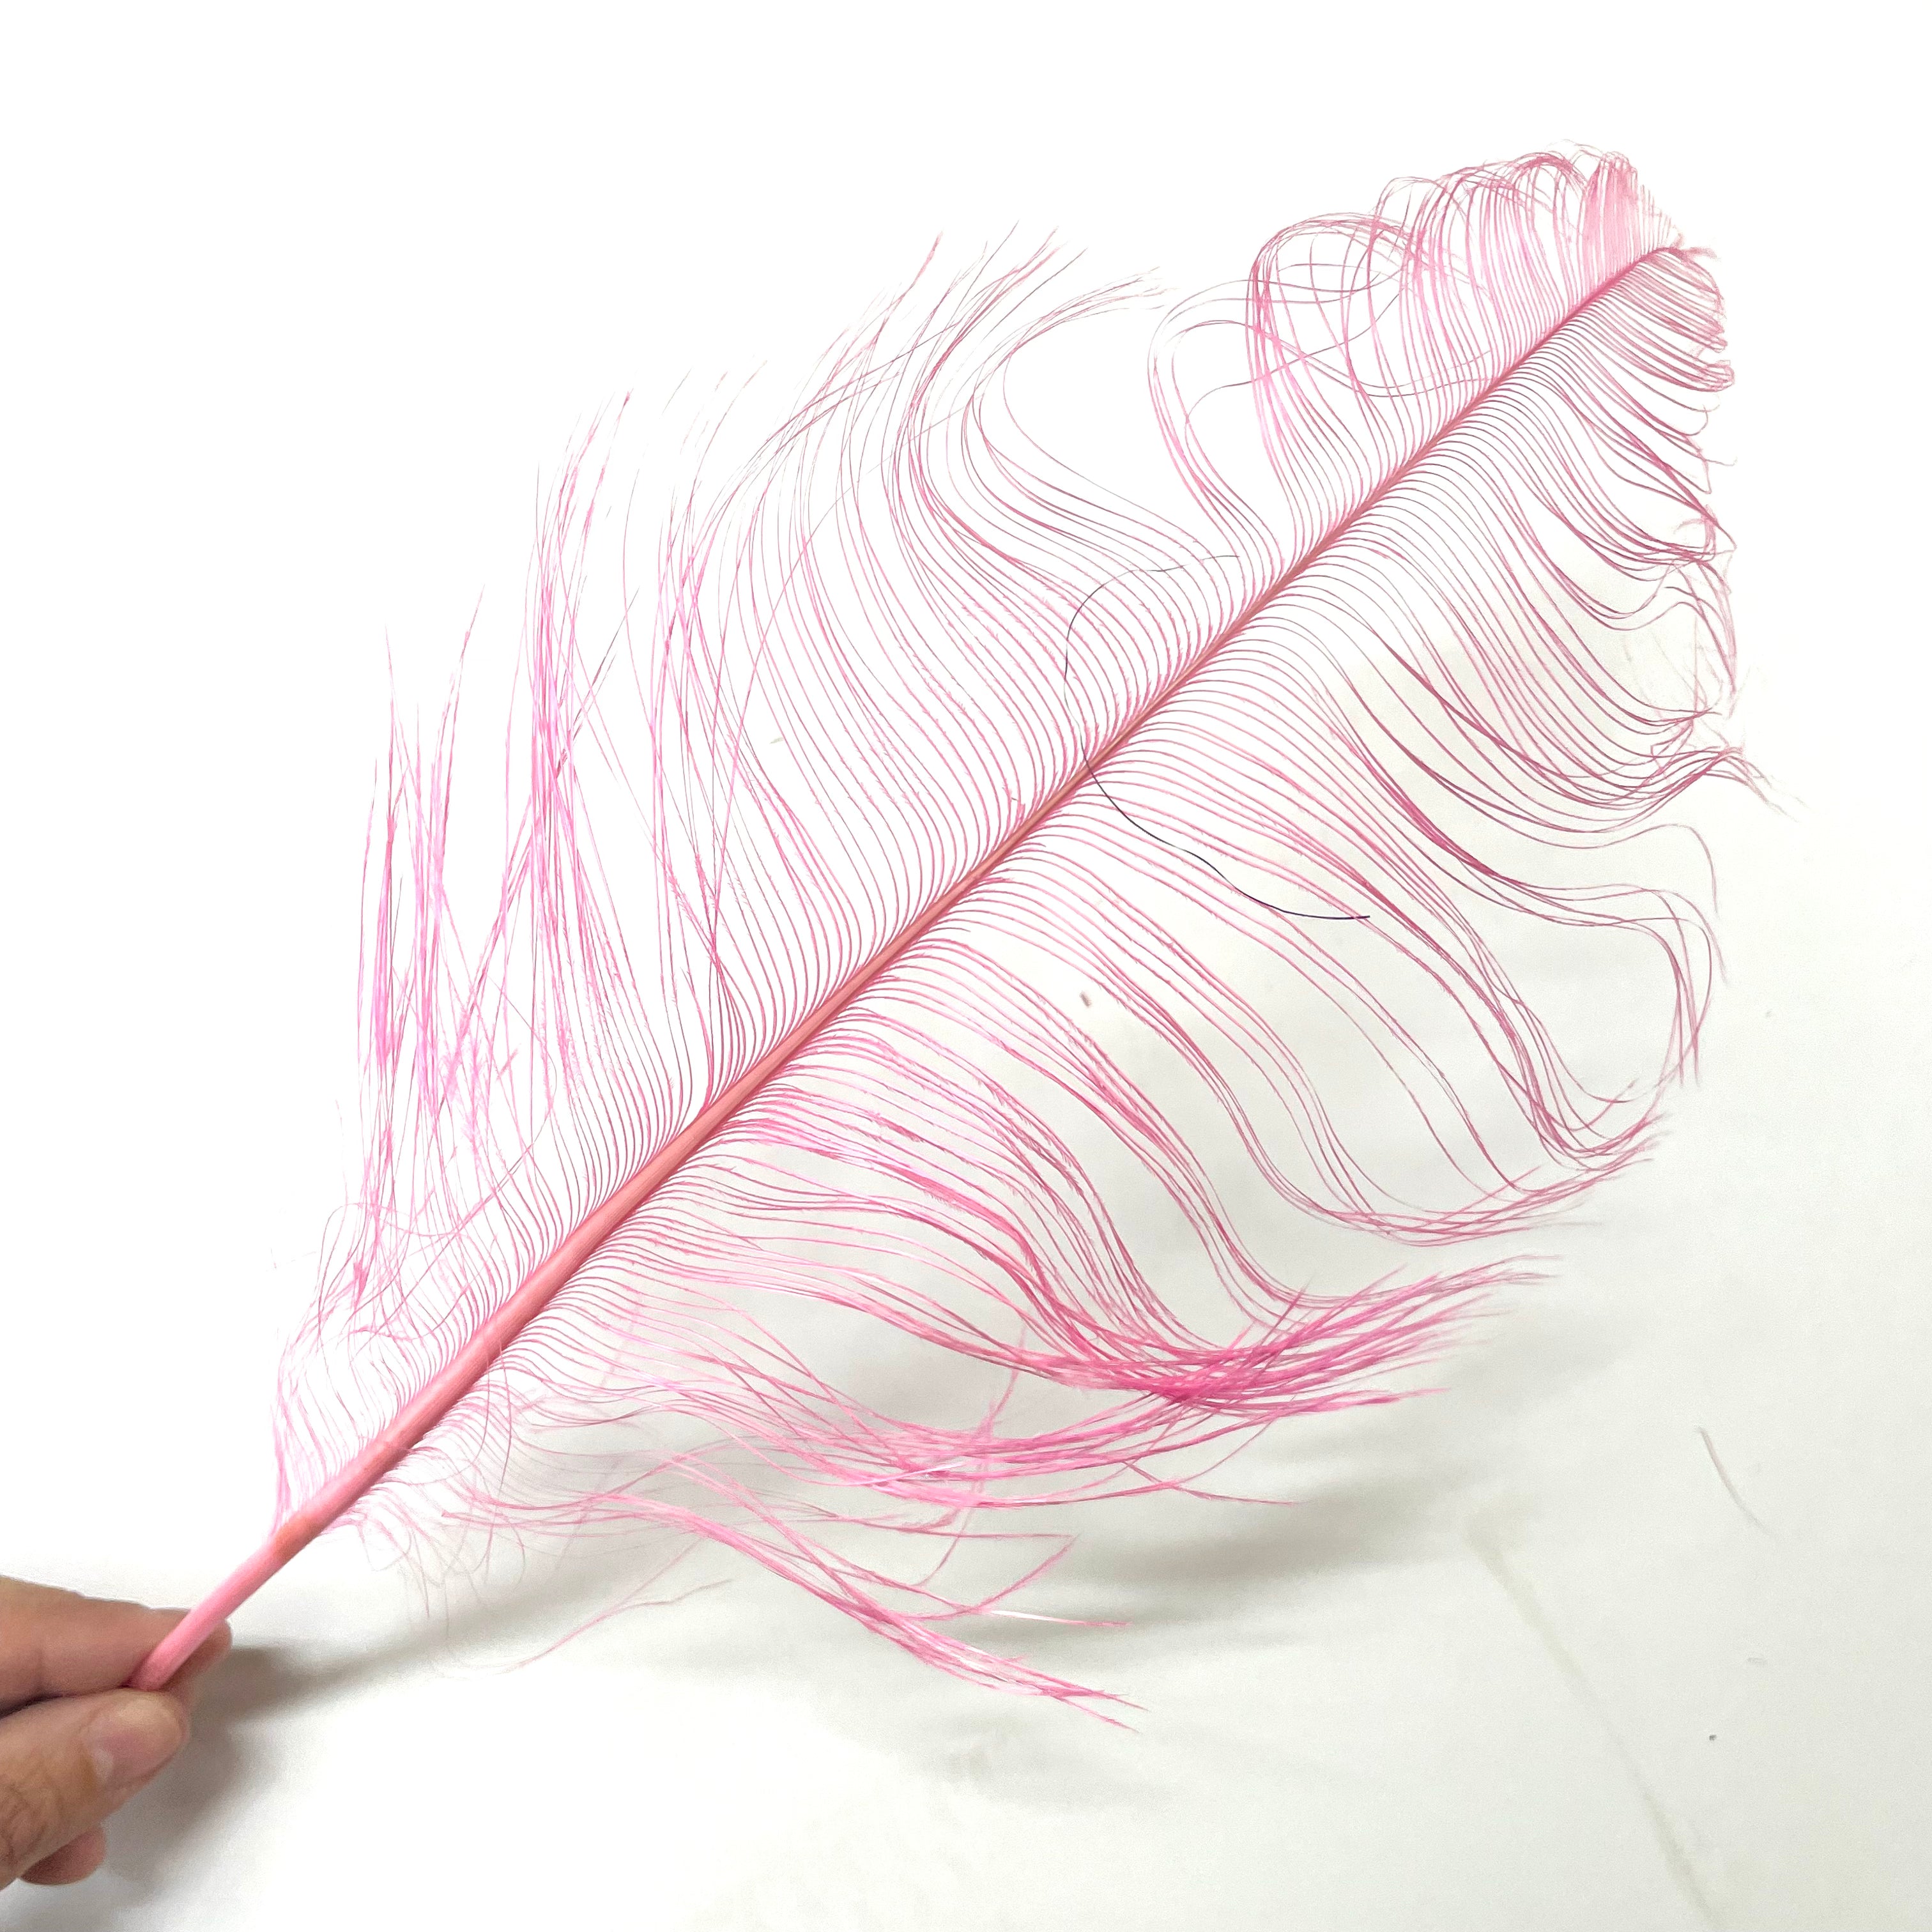 Ostrich Burnt Acid Dipped Cobweb Feather x 5 pcs - Hot Pink